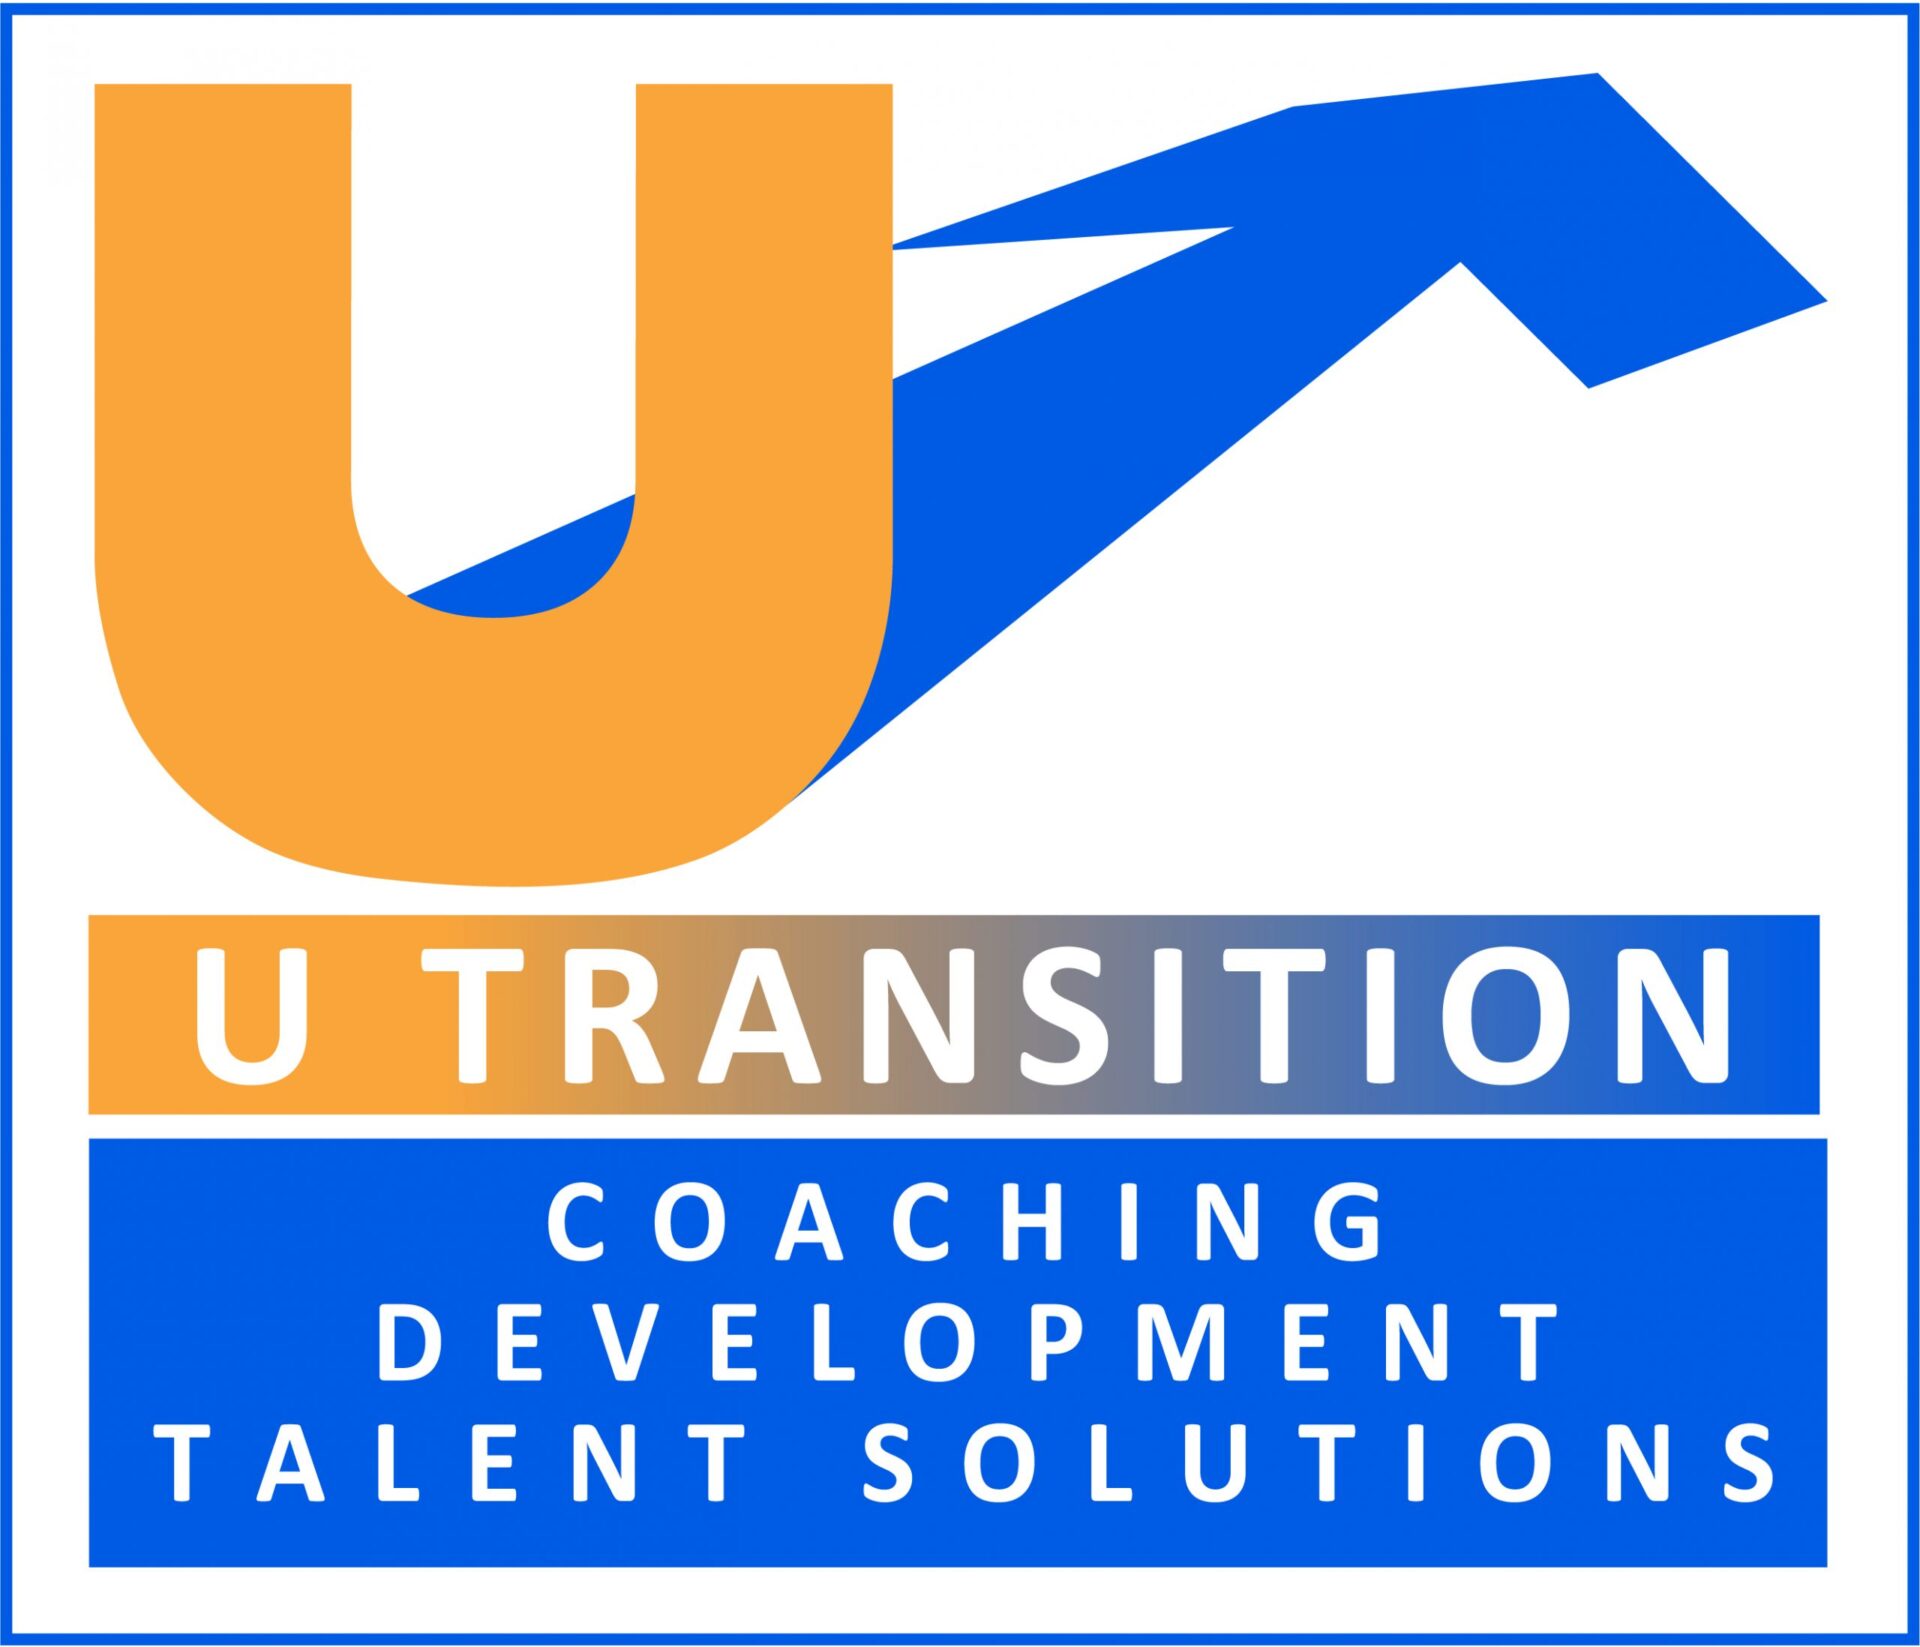 U Transition Limited